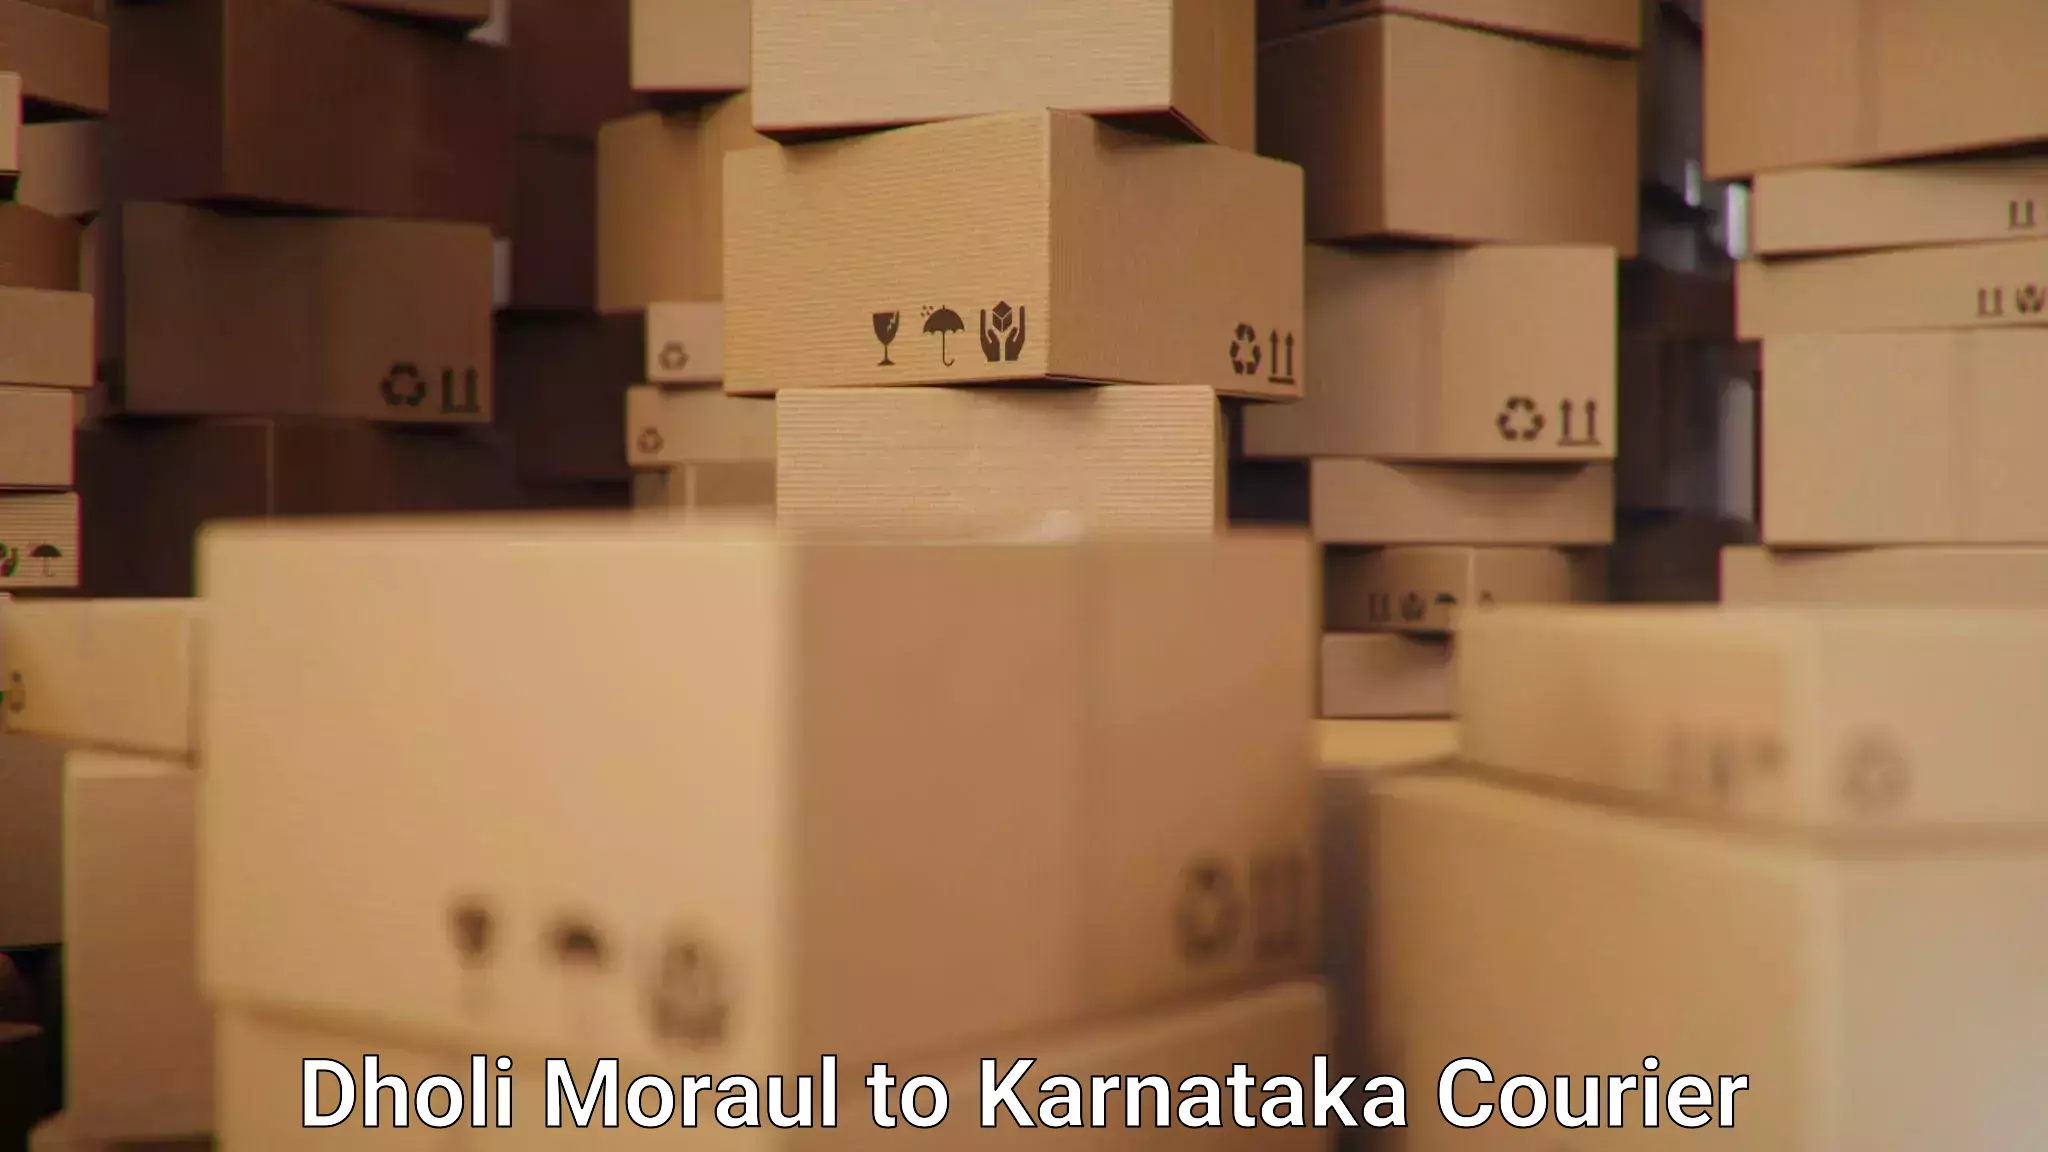 Budget-friendly shipping Dholi Moraul to Mangalore Port